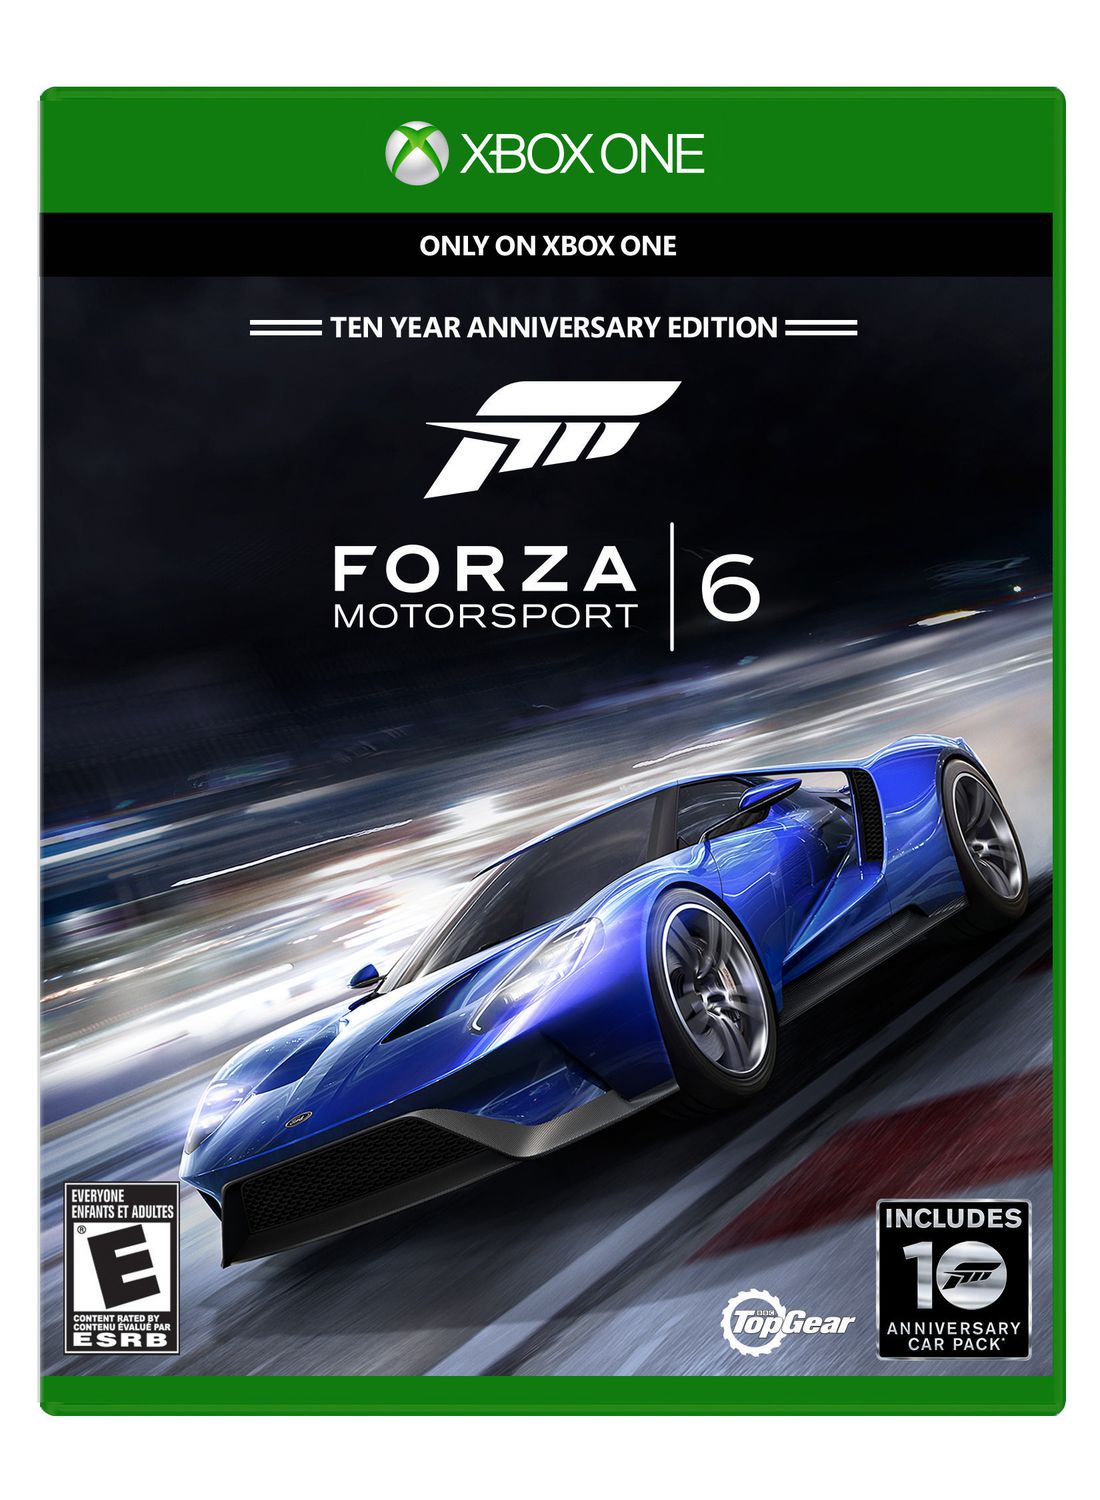 Forza Motorsport 6, Microsoft, Xbox One, 885370901450 - image 1 of 11